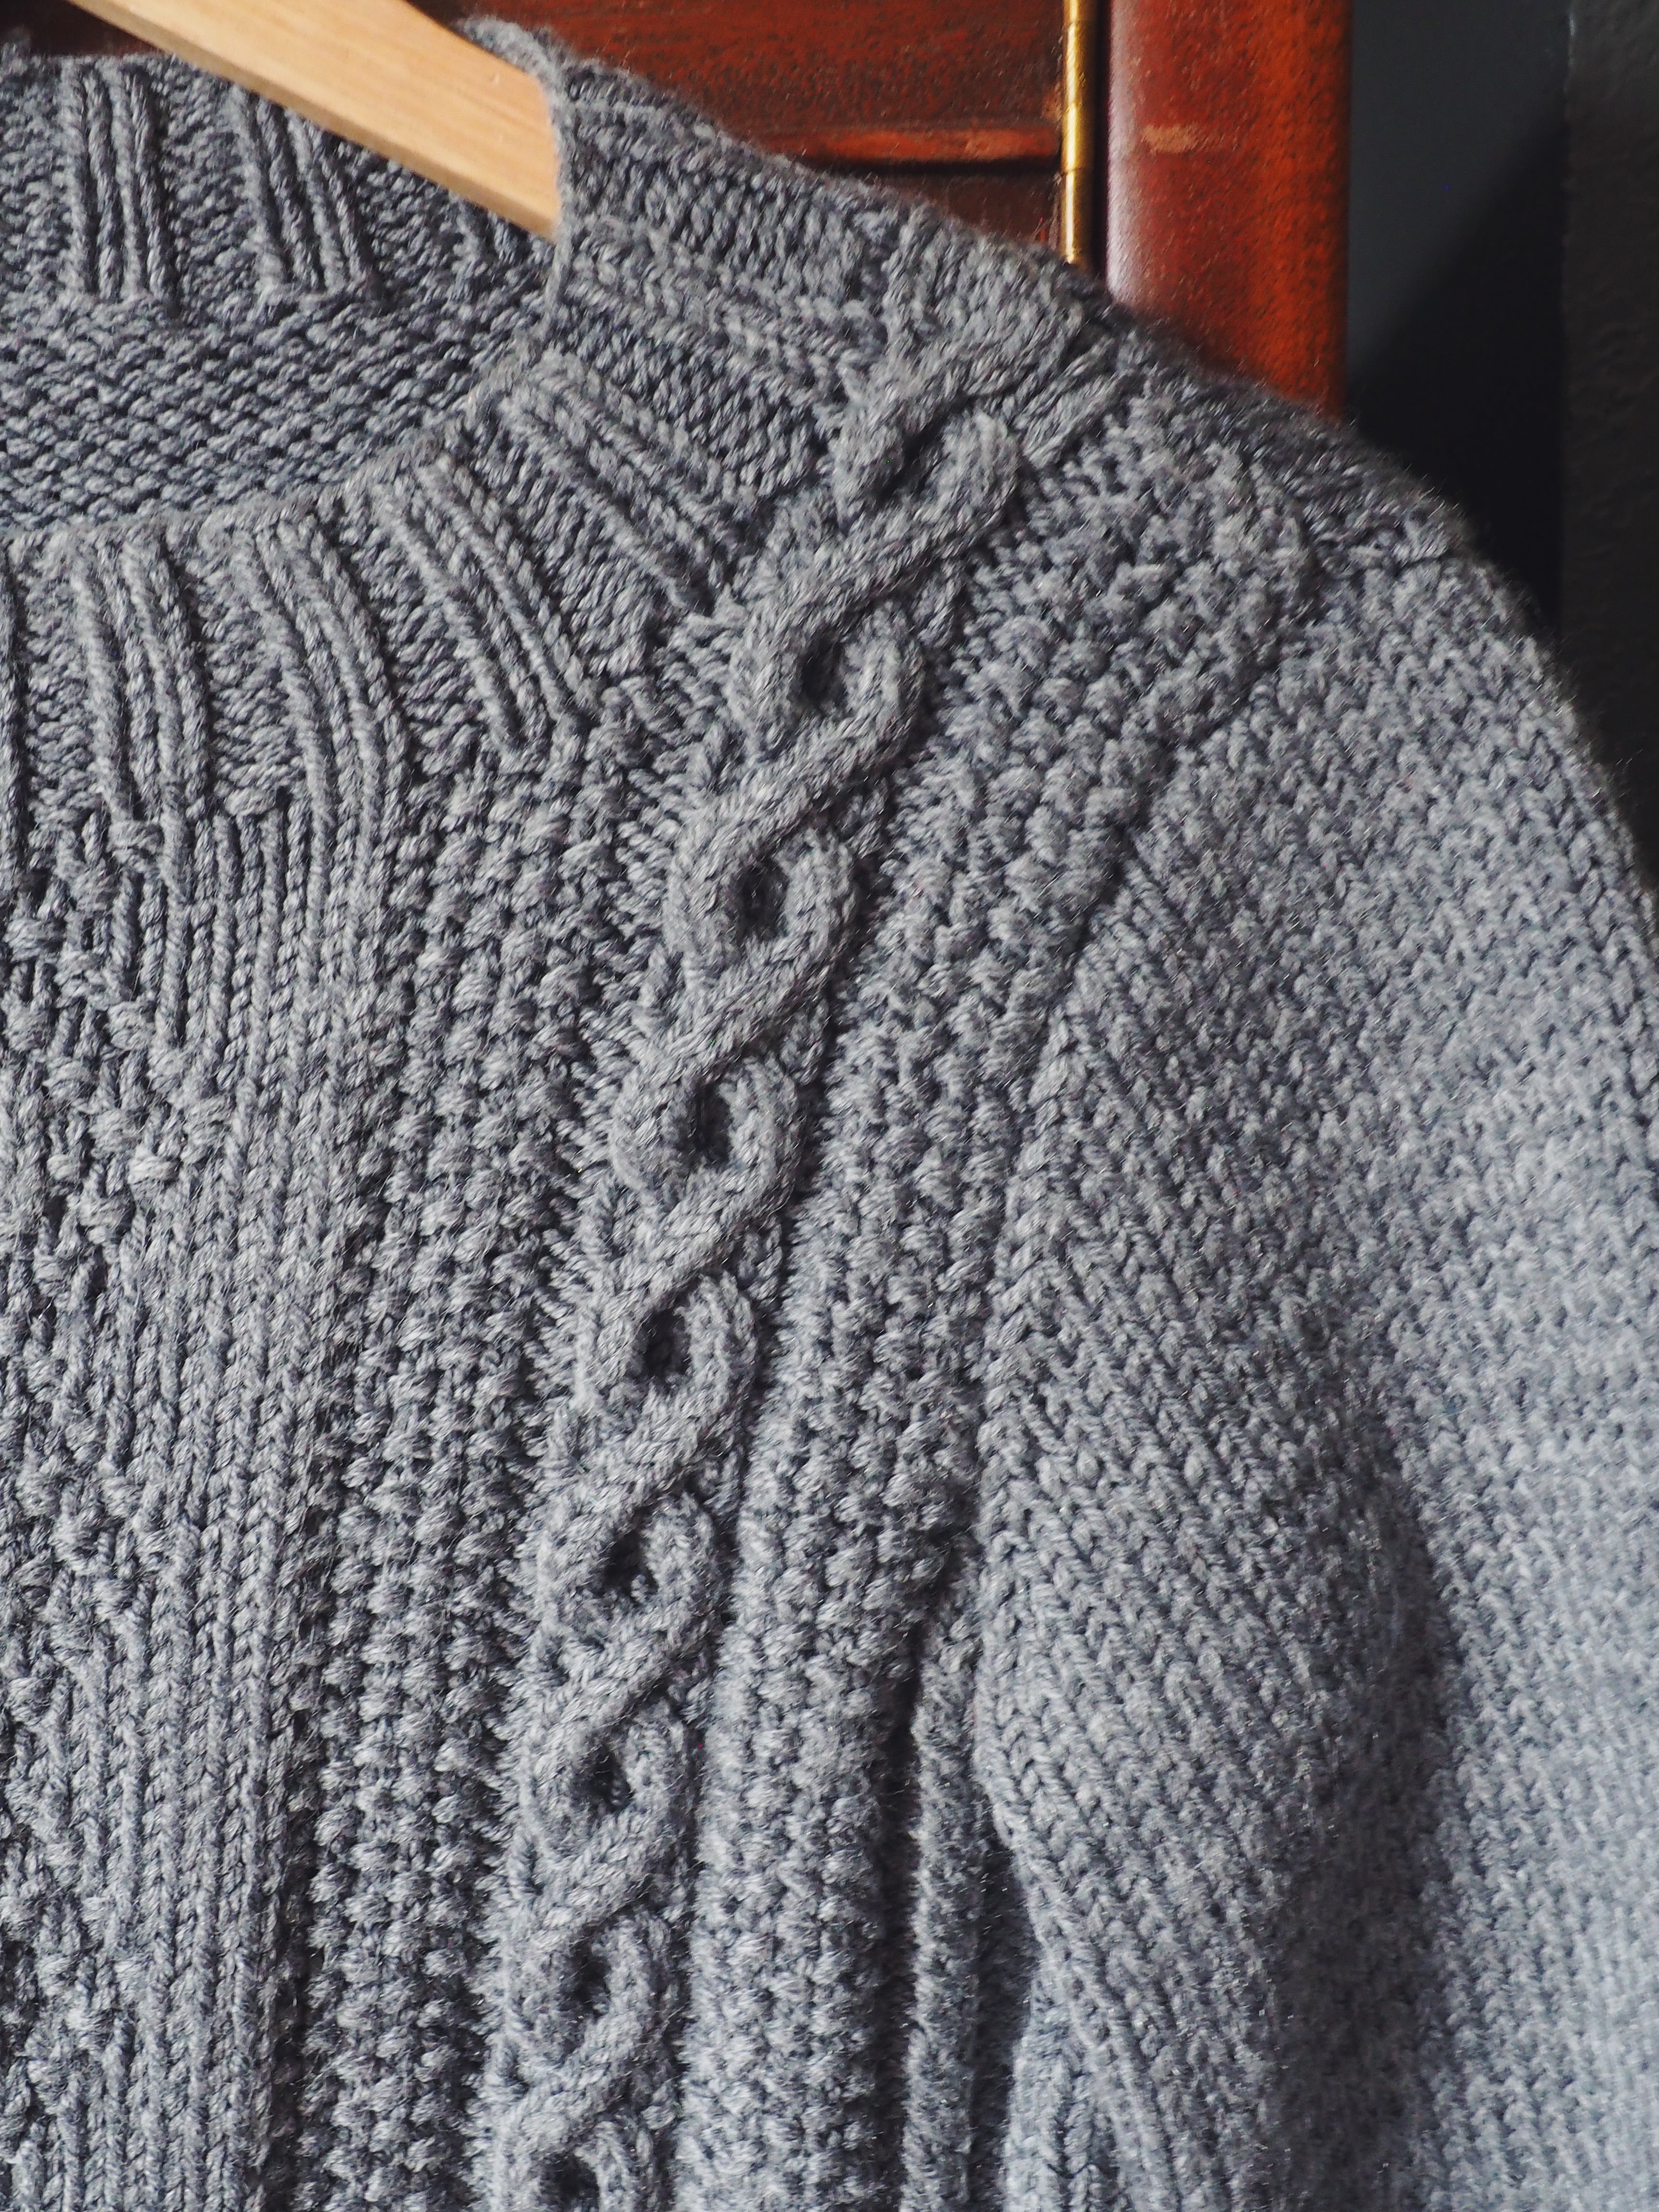 The Frankie Shop Devi Cable-Knit Mock Neck Sweater